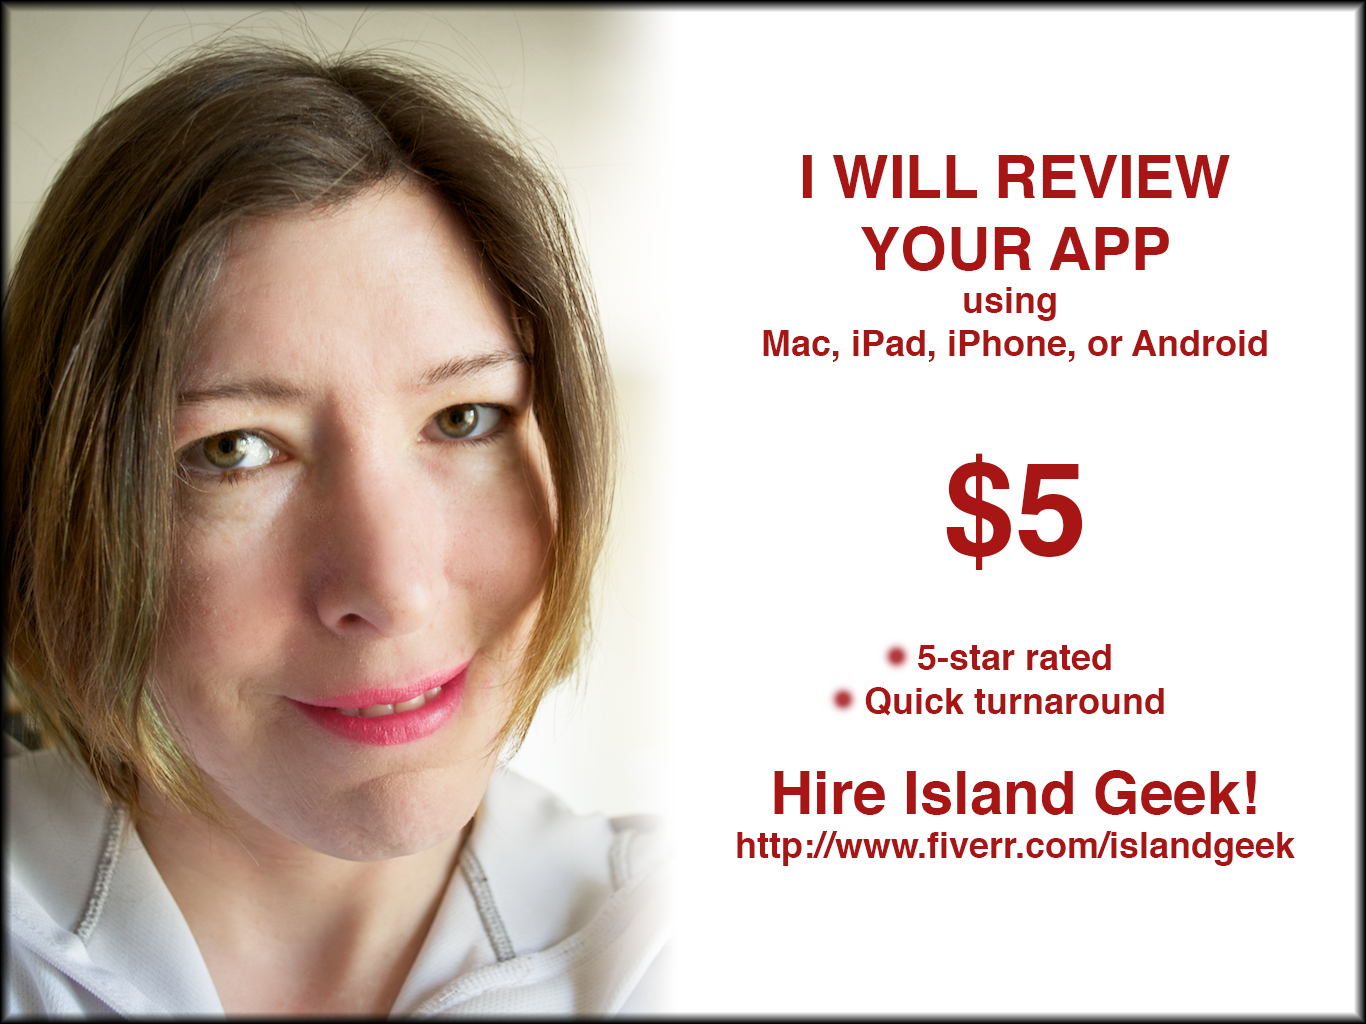 Hire Heidi on Fiverr.com: